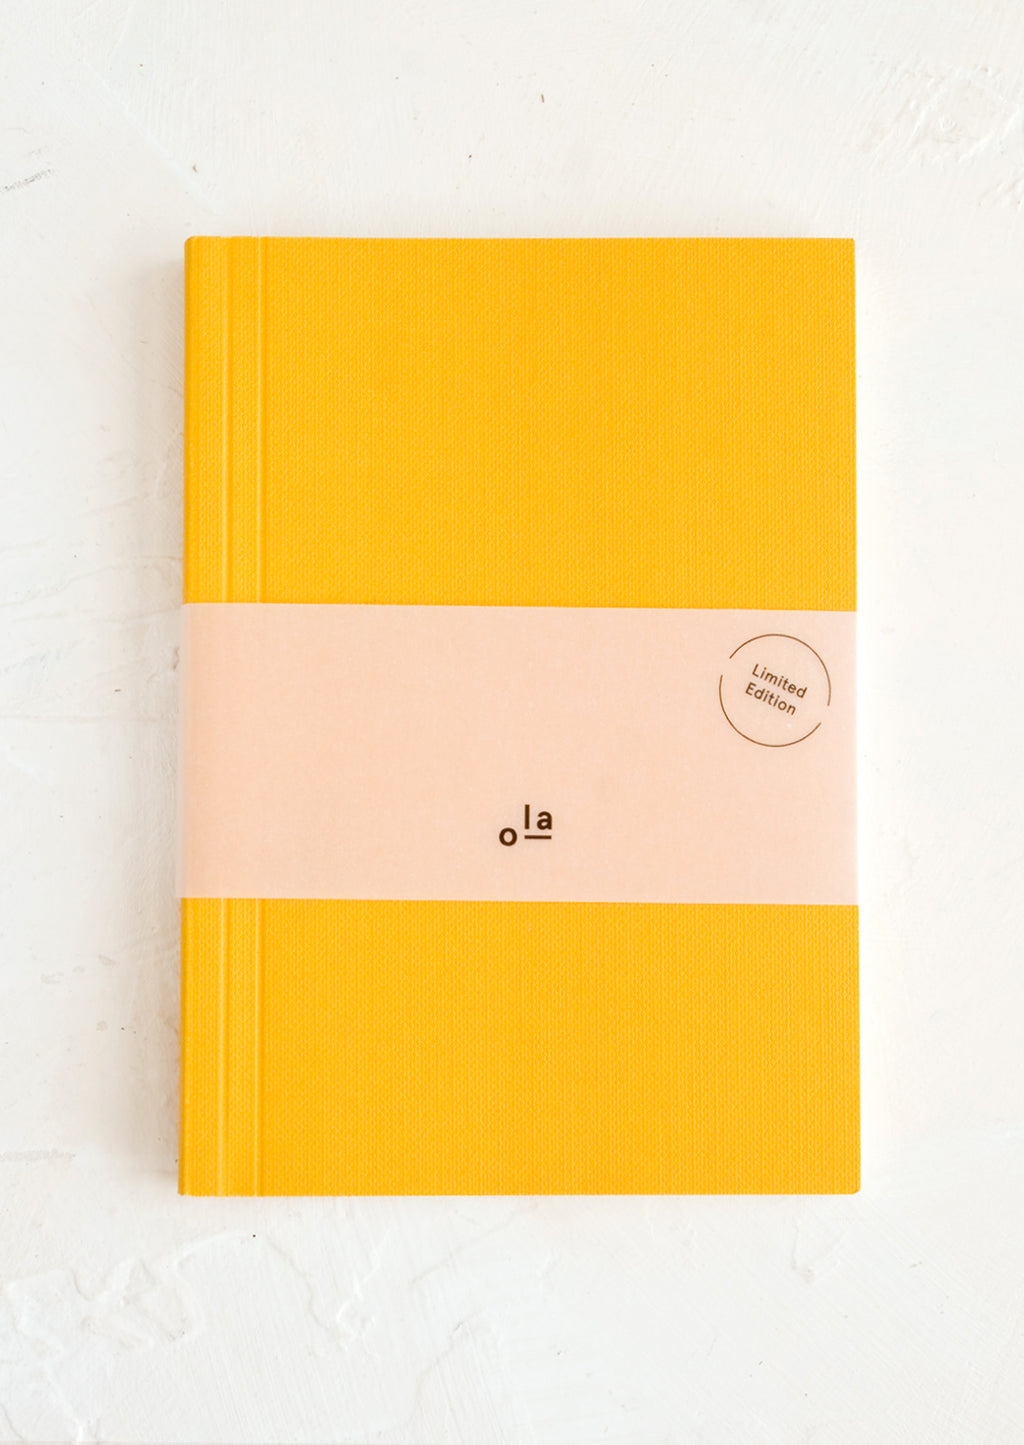 Small / Mustard / Dot Grid: A small yellow notebook.